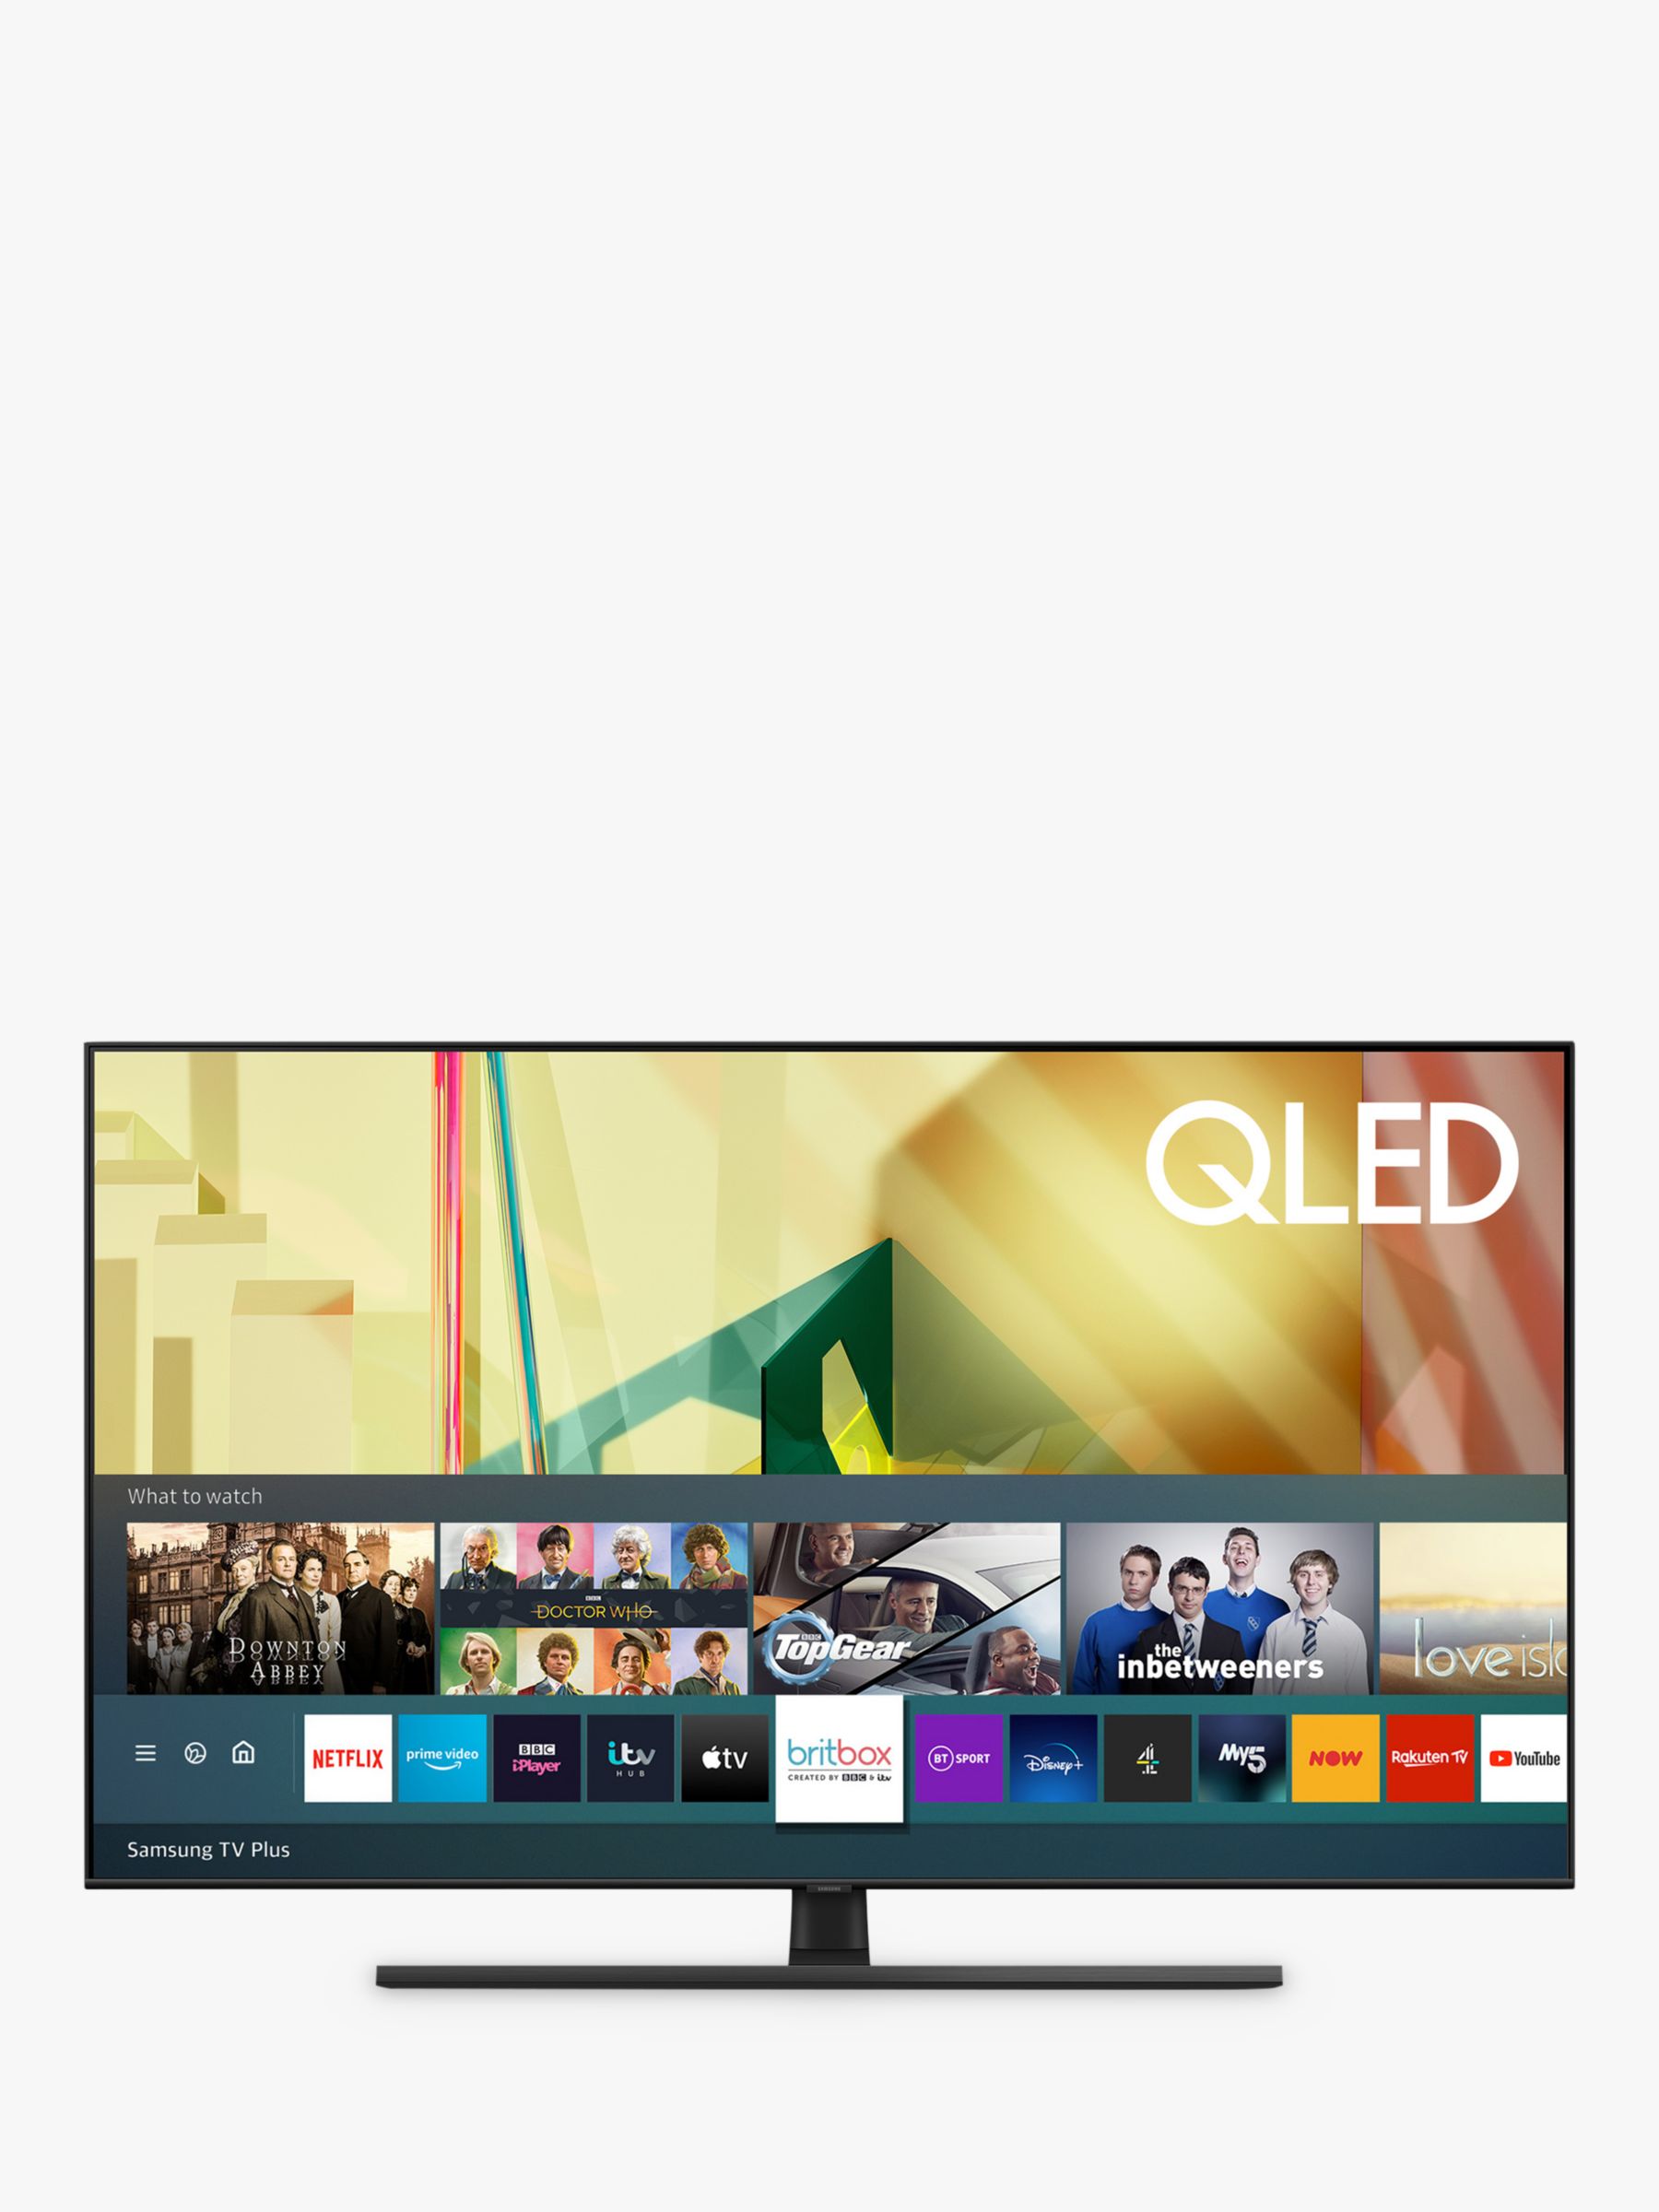 Samsung QE55Q70T (2020) QLED HDR 4K Ultra HD Smart TV, 55 inch with TVPlus/Freesat HD, Black at ...